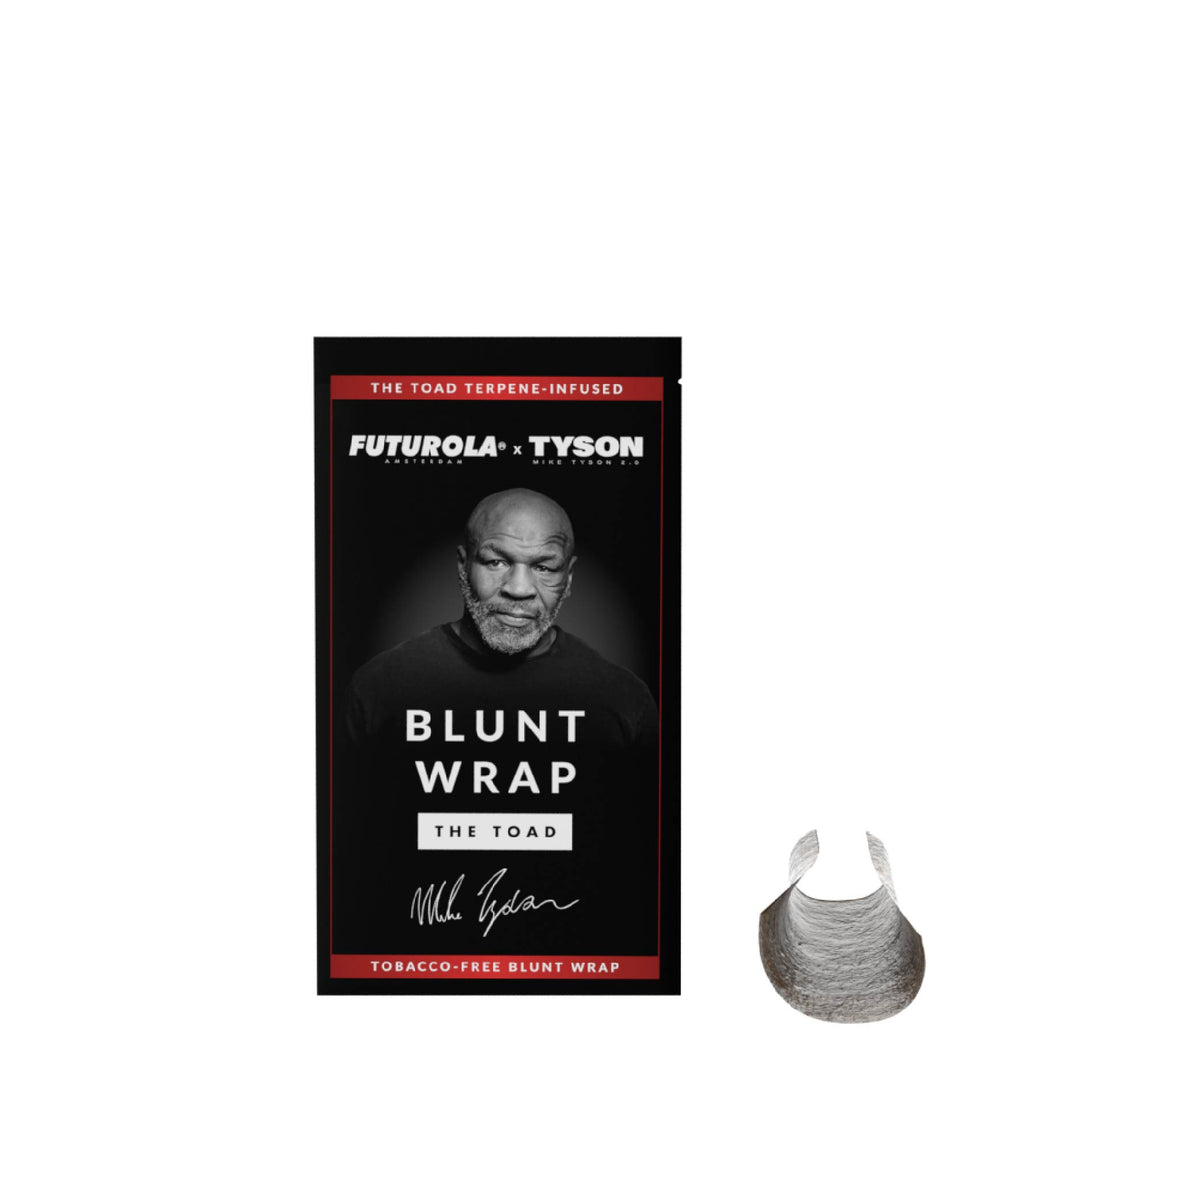 Backwoods Cigar Wrap Blunts 5 Pack, 100% Tobacco